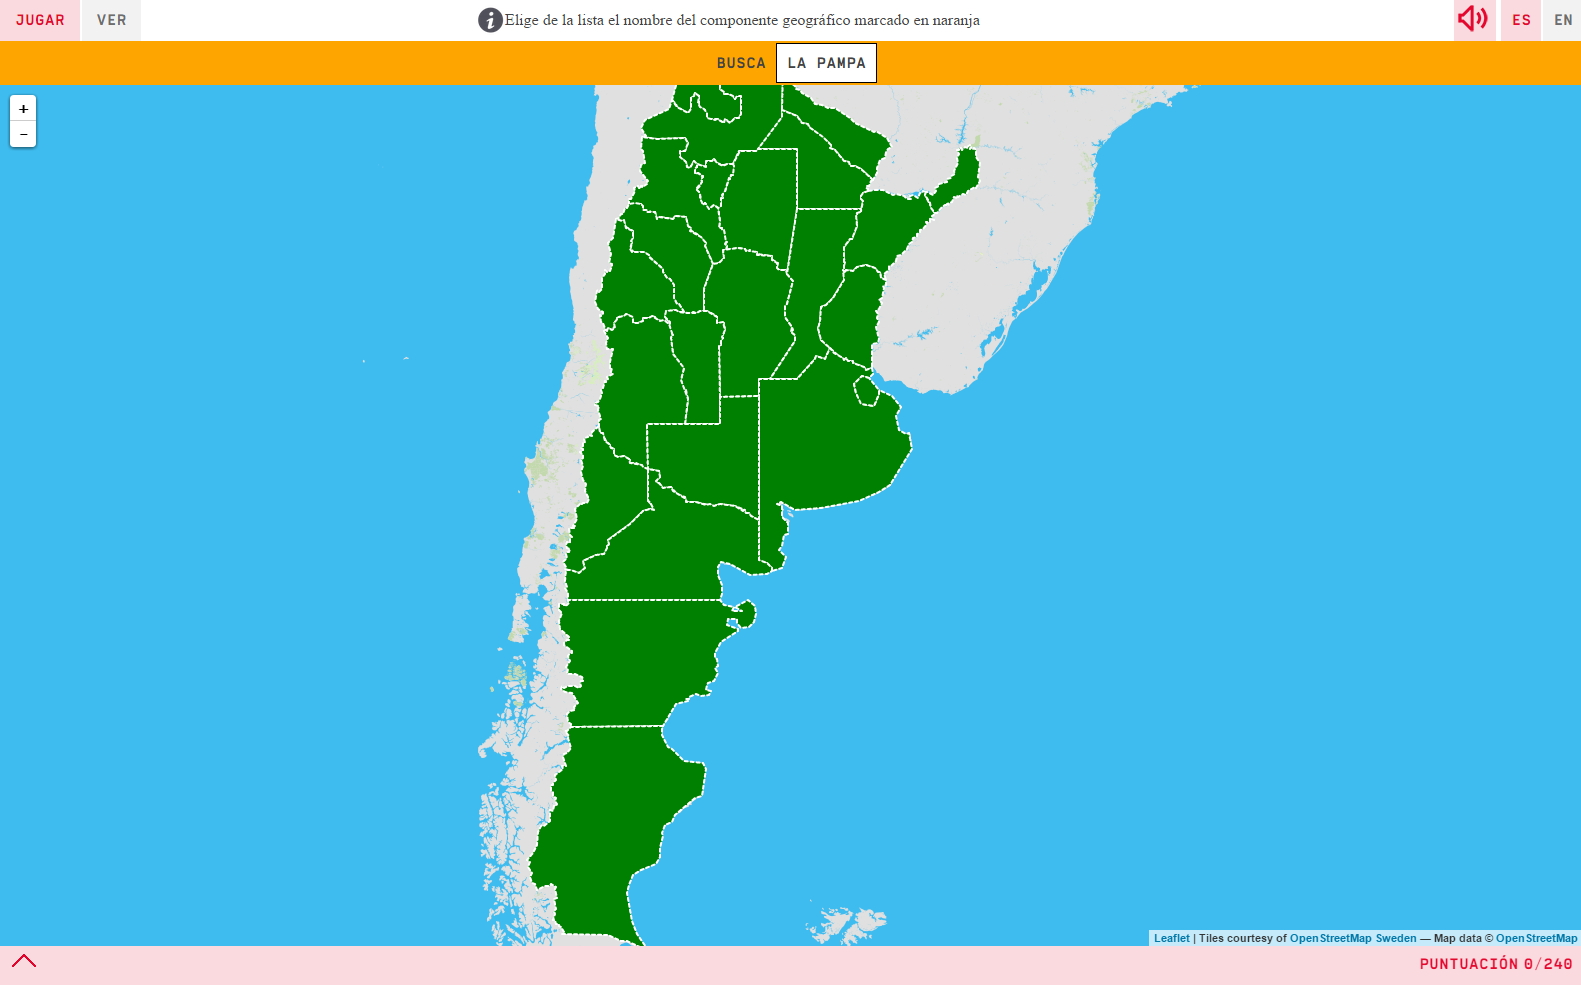 Province dell'Argentina